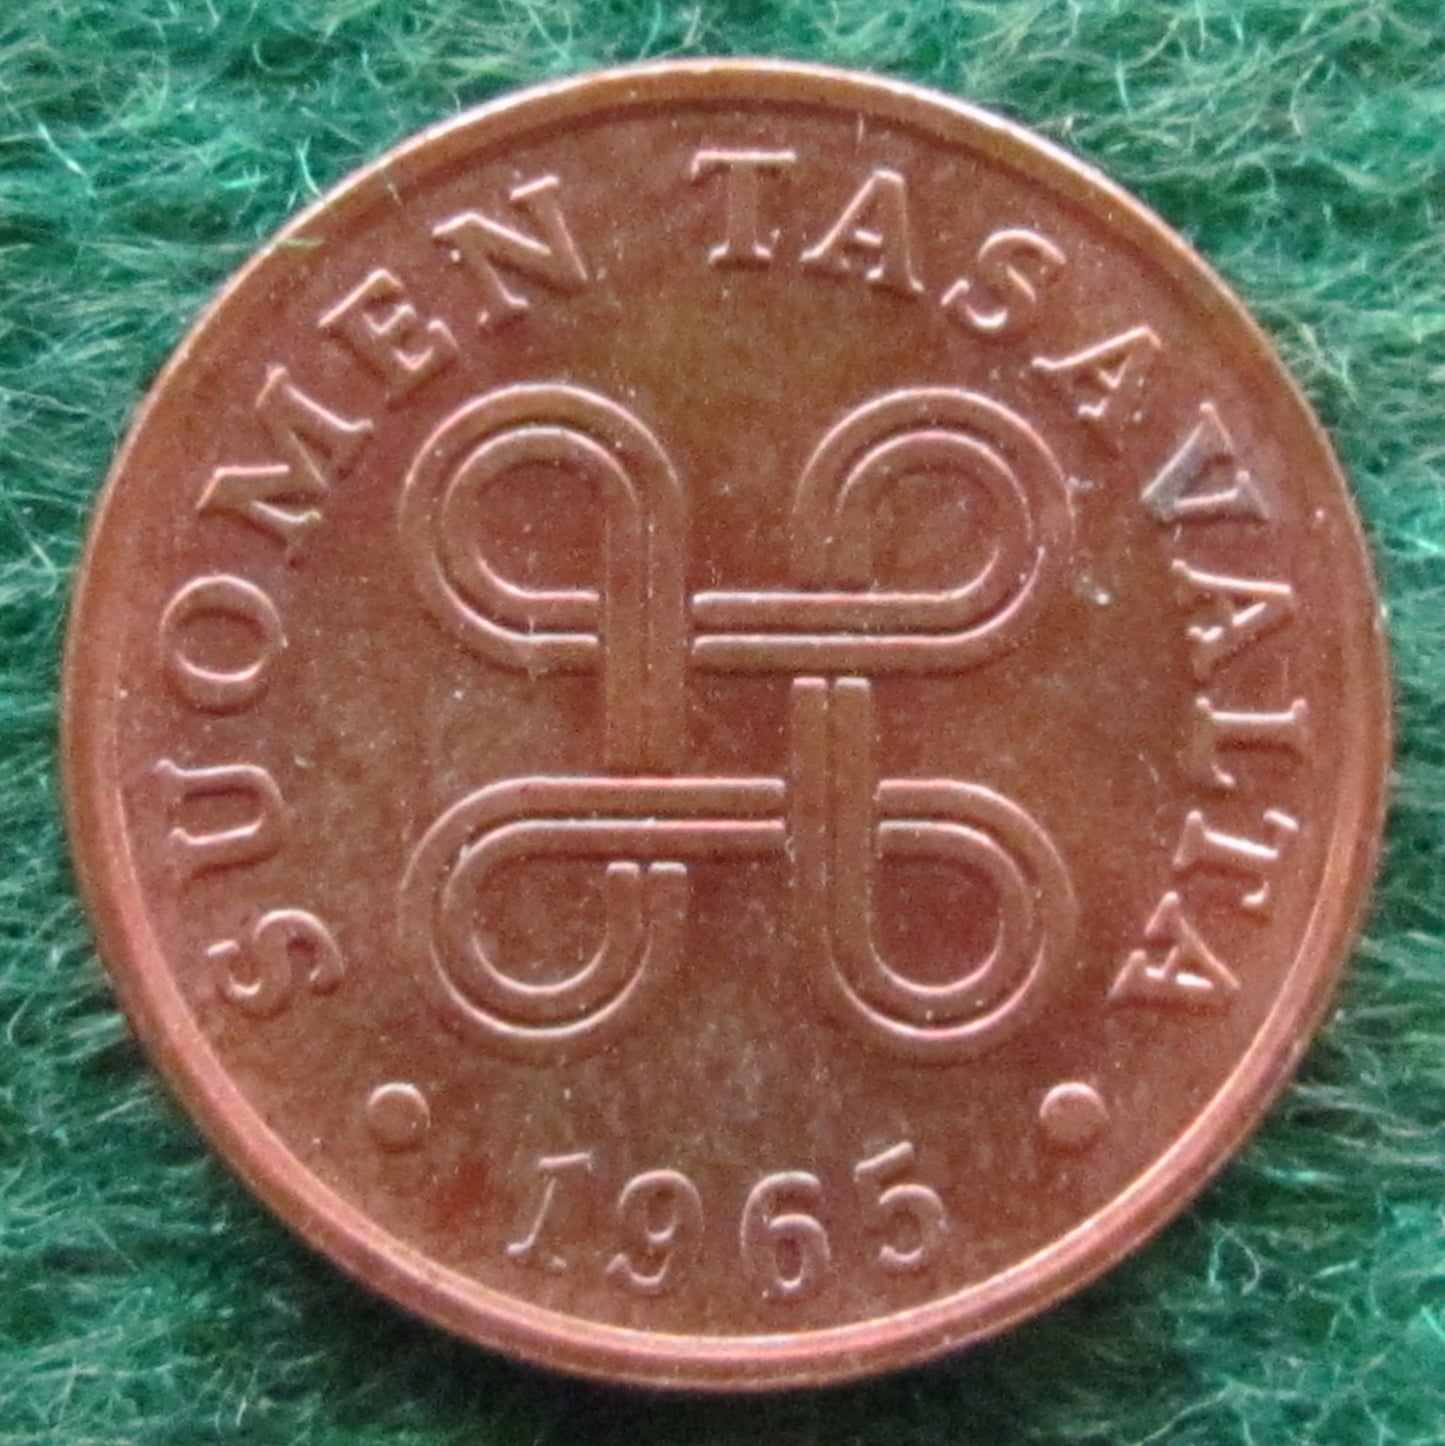 Suomen Tasavalta Finland 1965 1 Penni Coin - Circulated